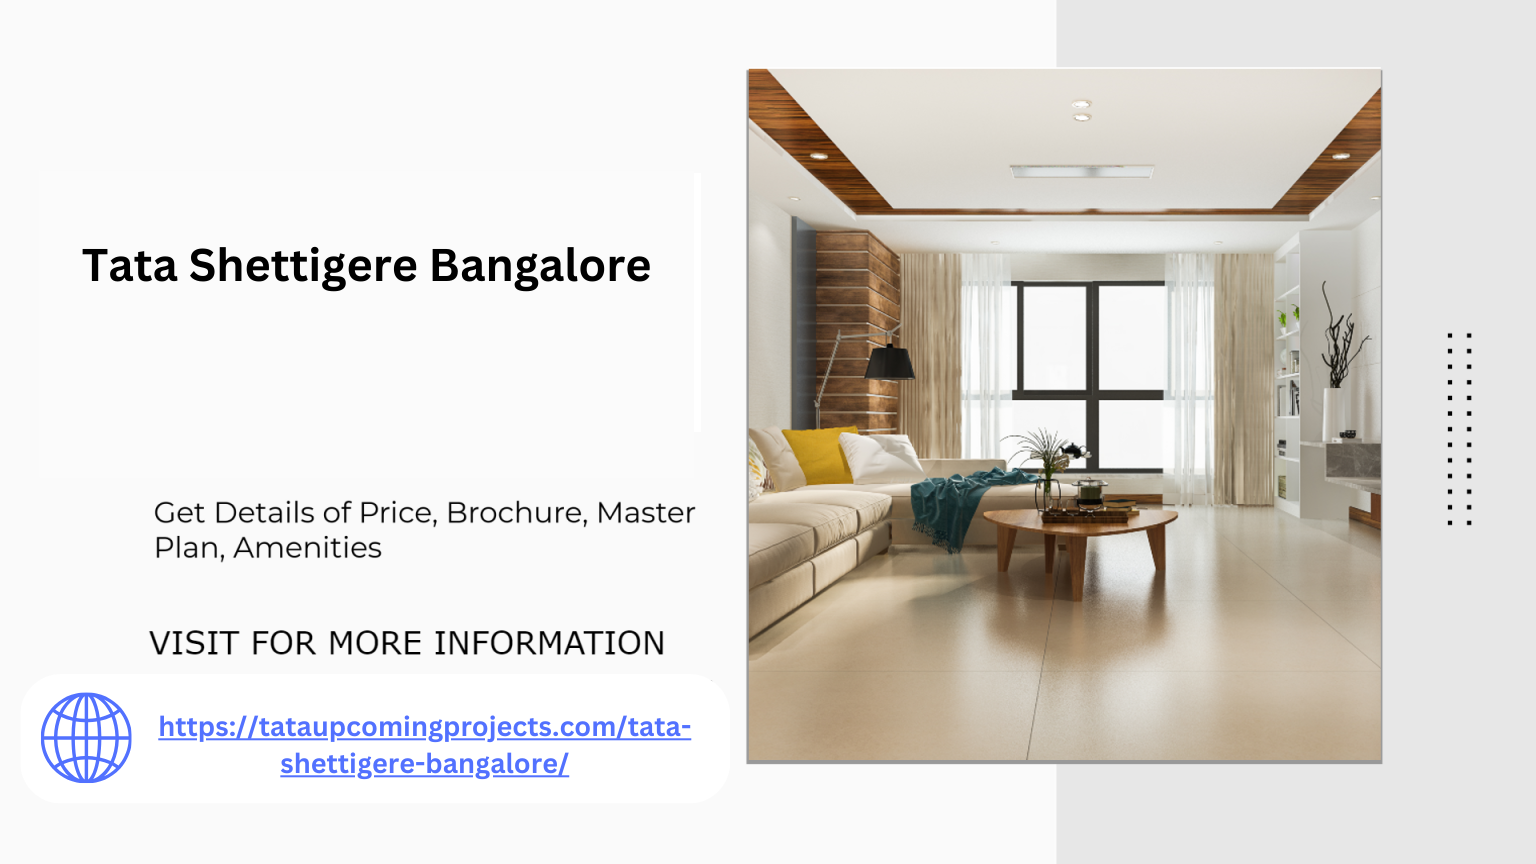 Tata Shettigere Bangalore